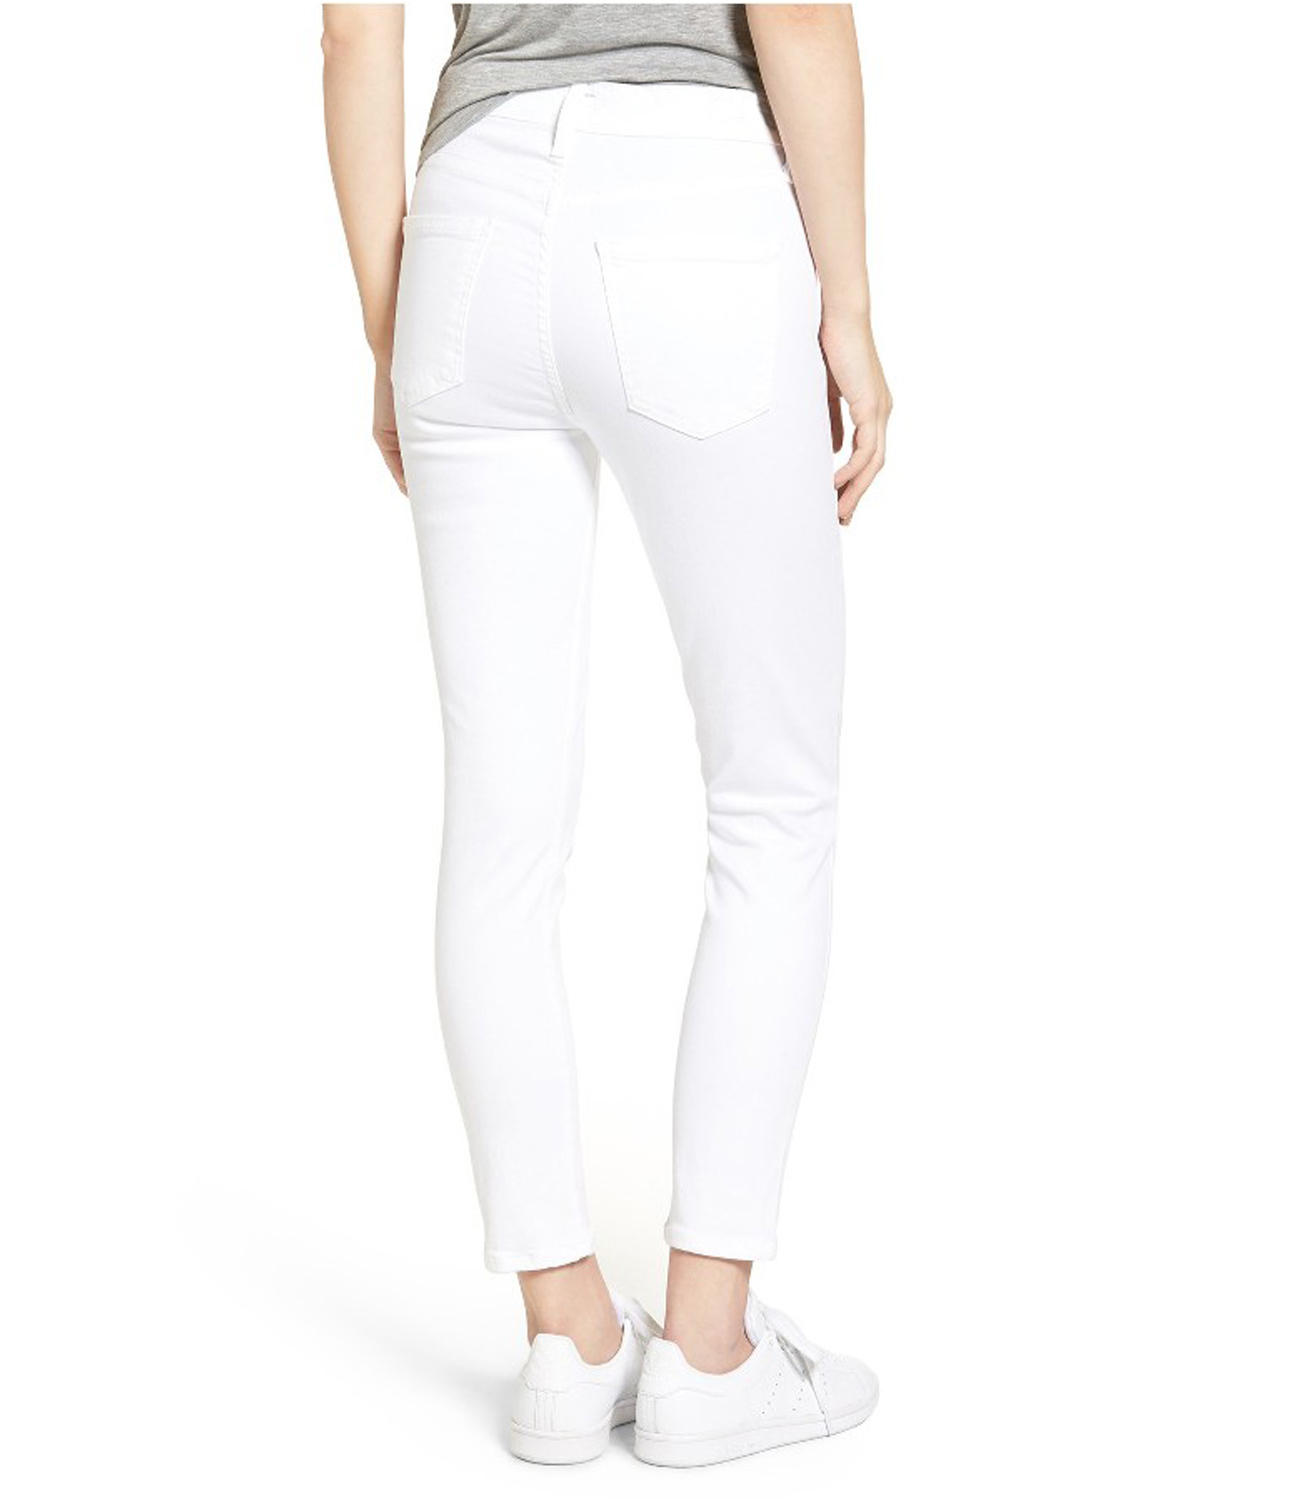 Buy Rock Hudson Women's Denim Jeans - Contemporary Regular Fit Denims ...